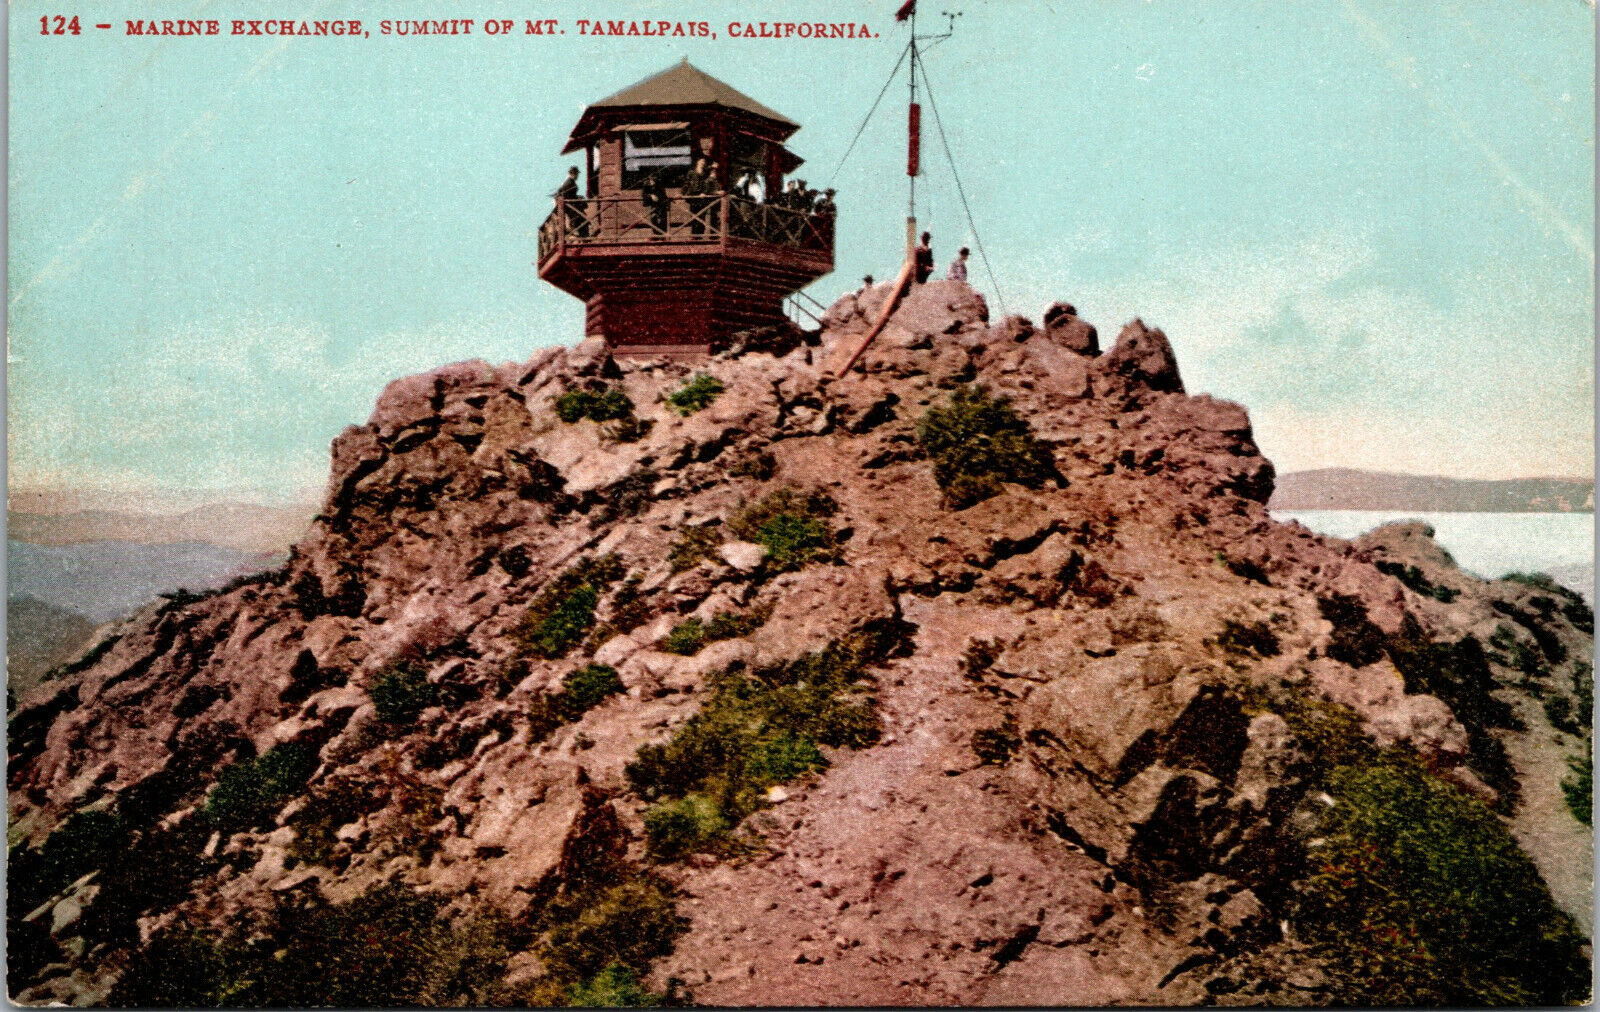 Vtg 1910s Marine Exchange Summit of Mt Tamalpais California CA Postcard